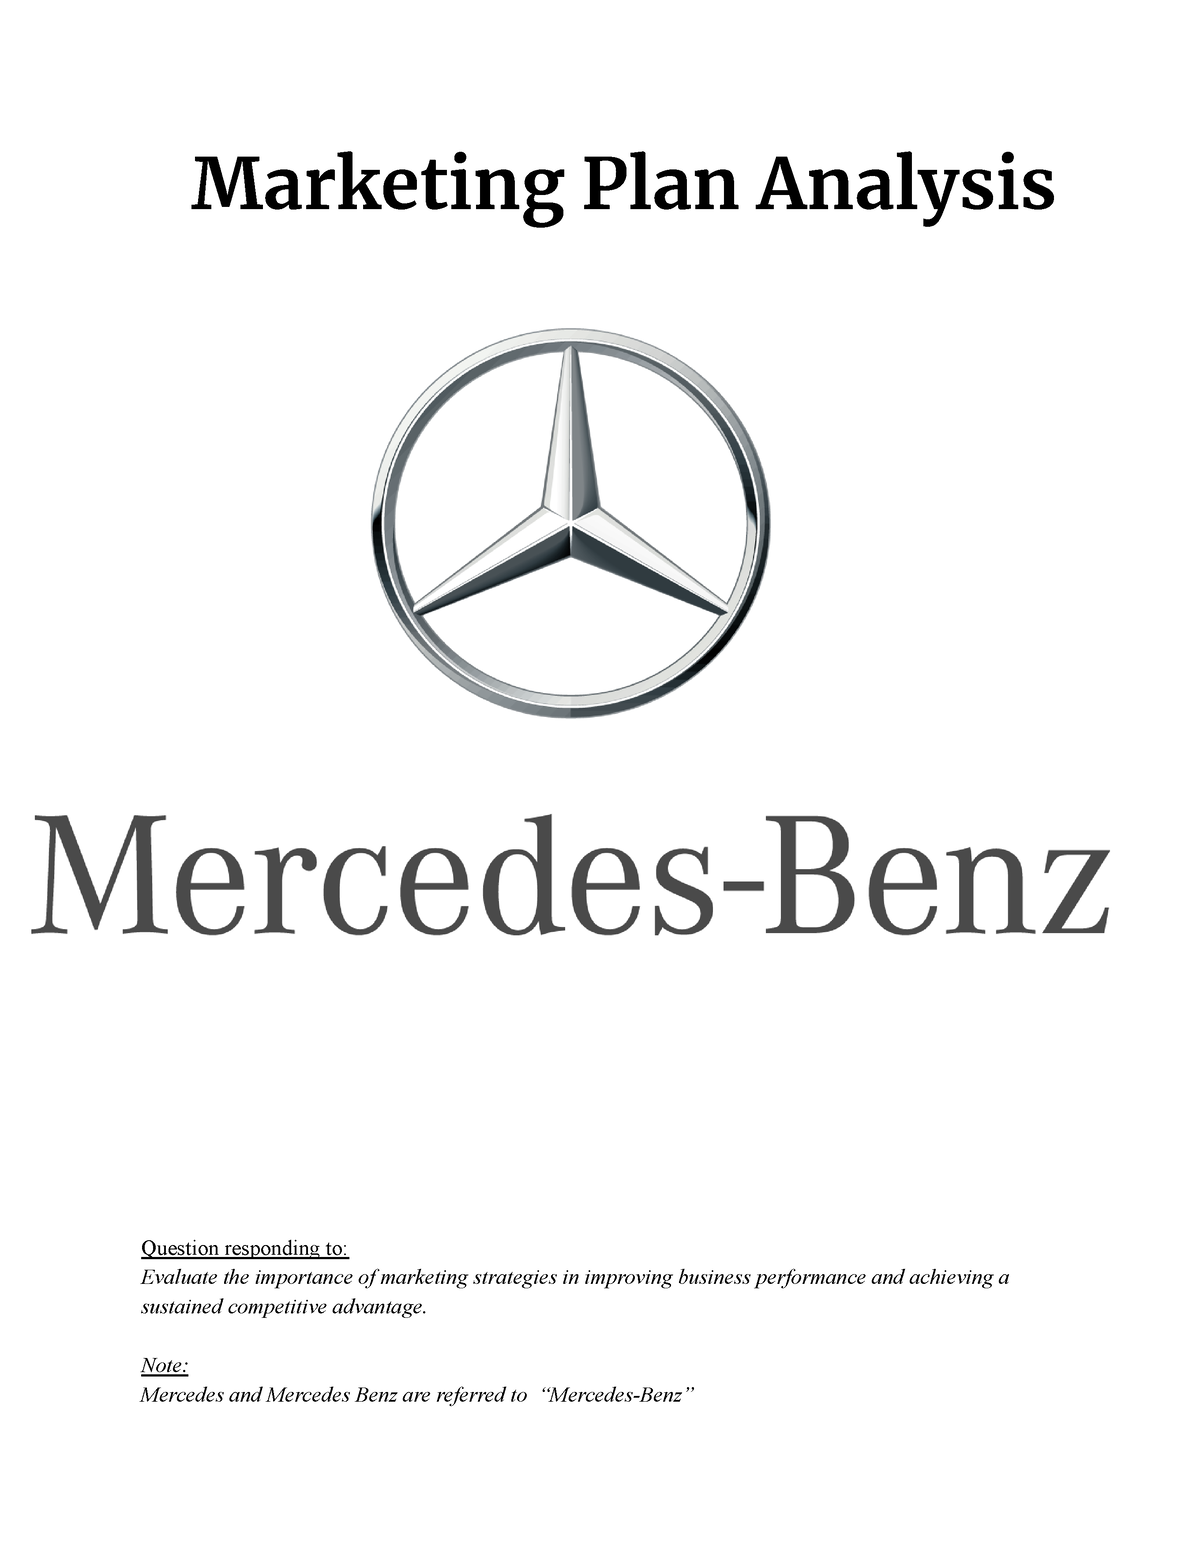 marketing-plan-analysis-marketing-plan-analysis-question-responding